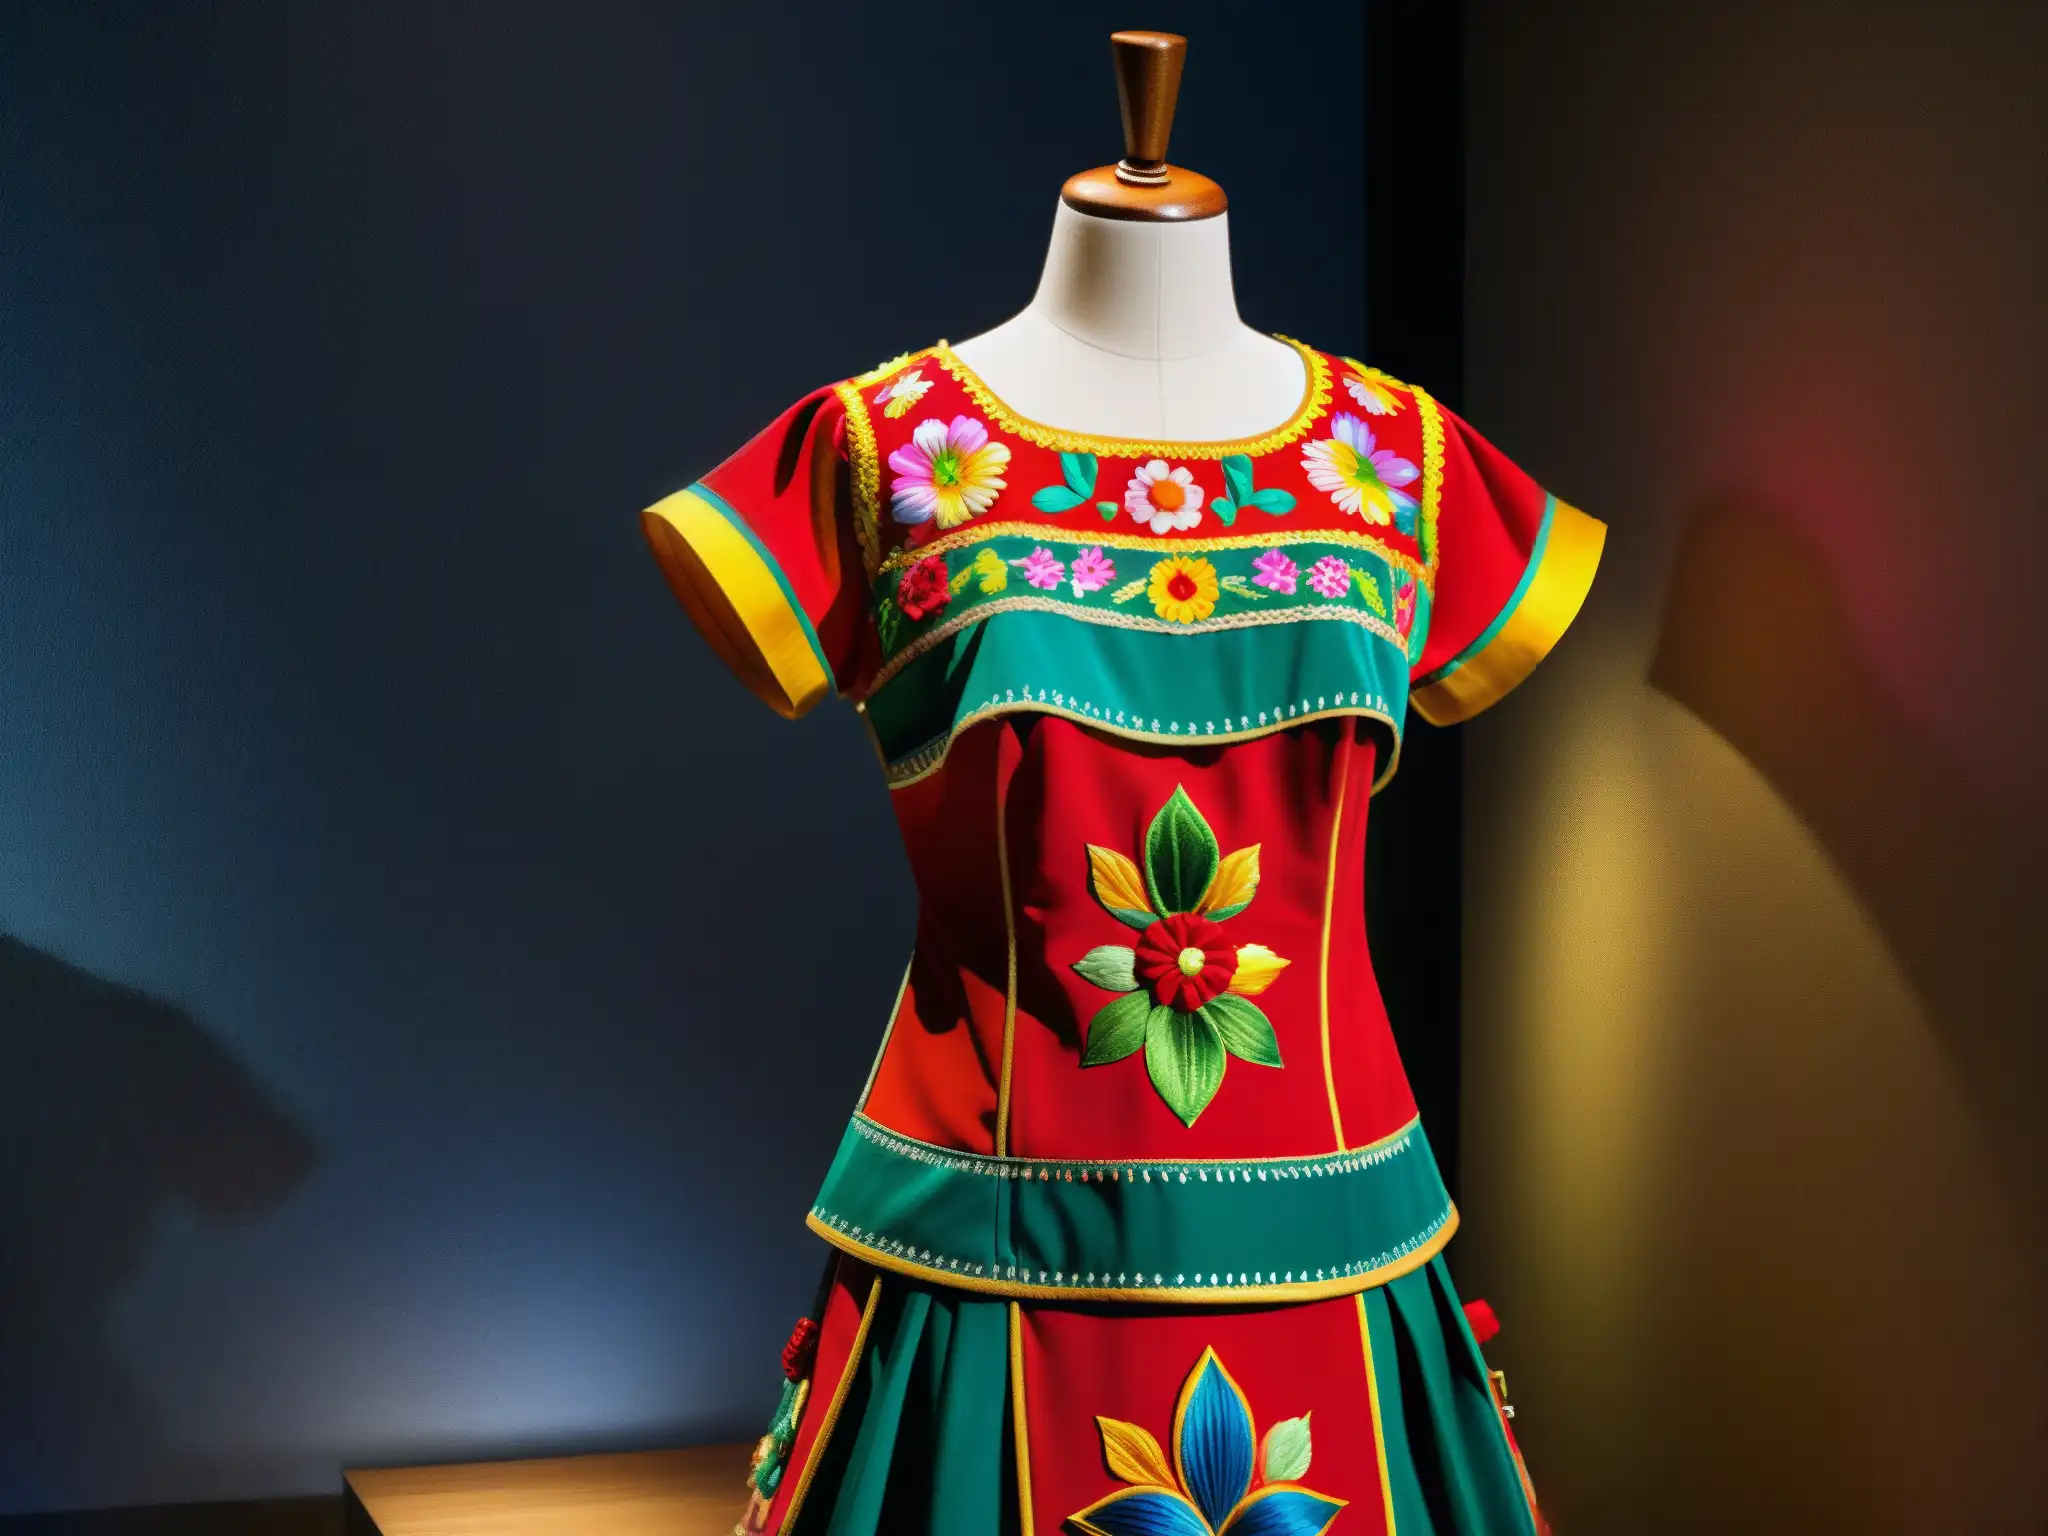 Detalle de vestido China Poblana en museo, resaltando origen y evolución de China Poblana con bordados e historia cultural